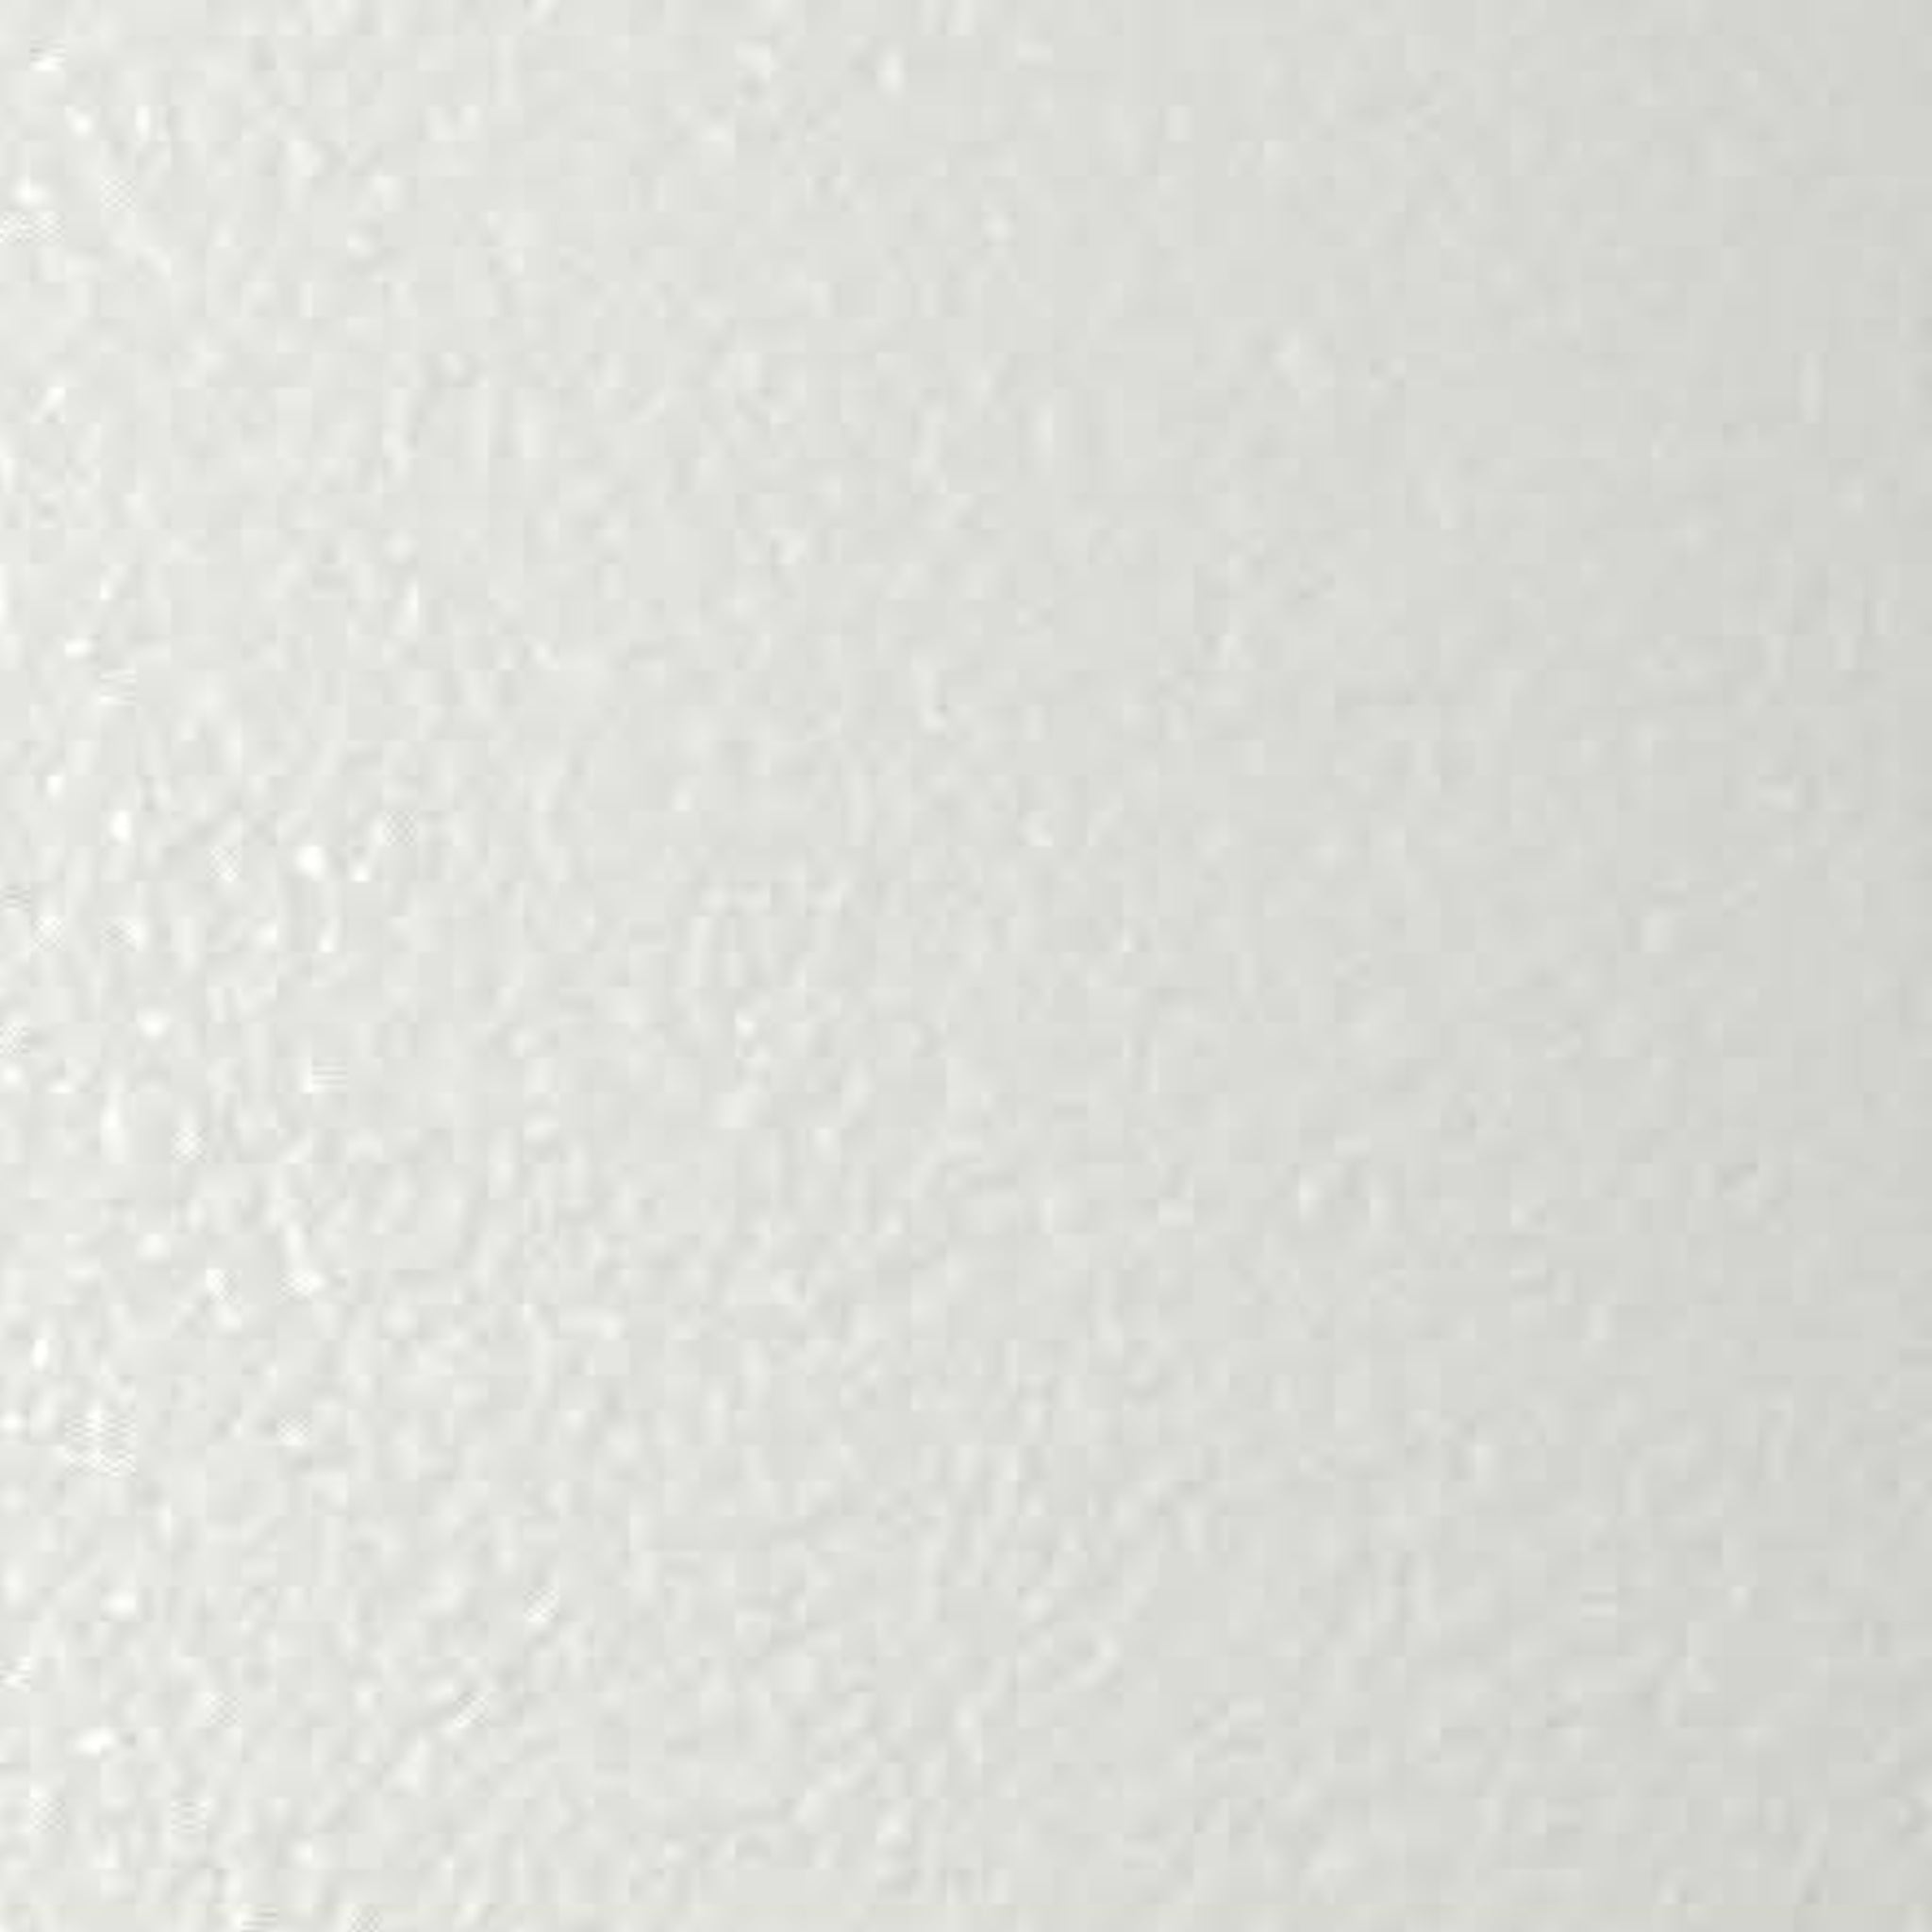 AULIC BEAU MONDE LED MIRROR MATTE WHITE 450MM SAMPLE